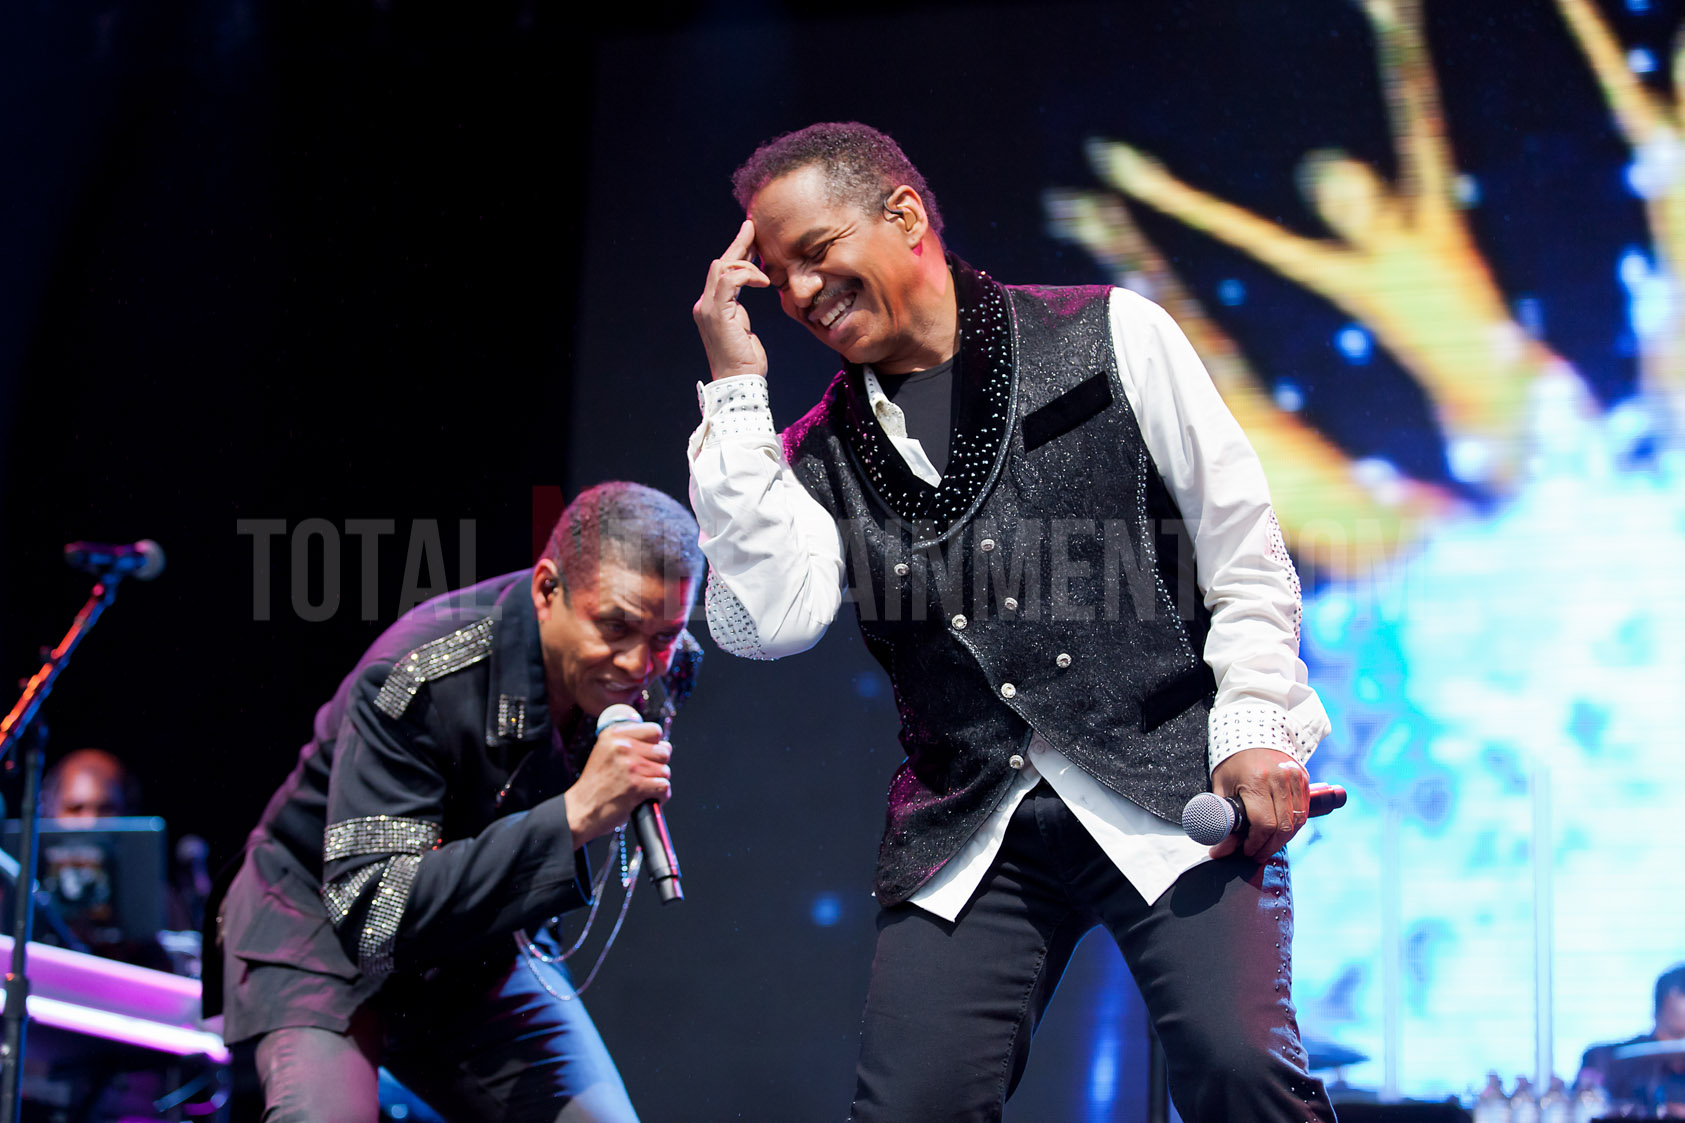 The Jacksons, Haydock, Concert, Live Event